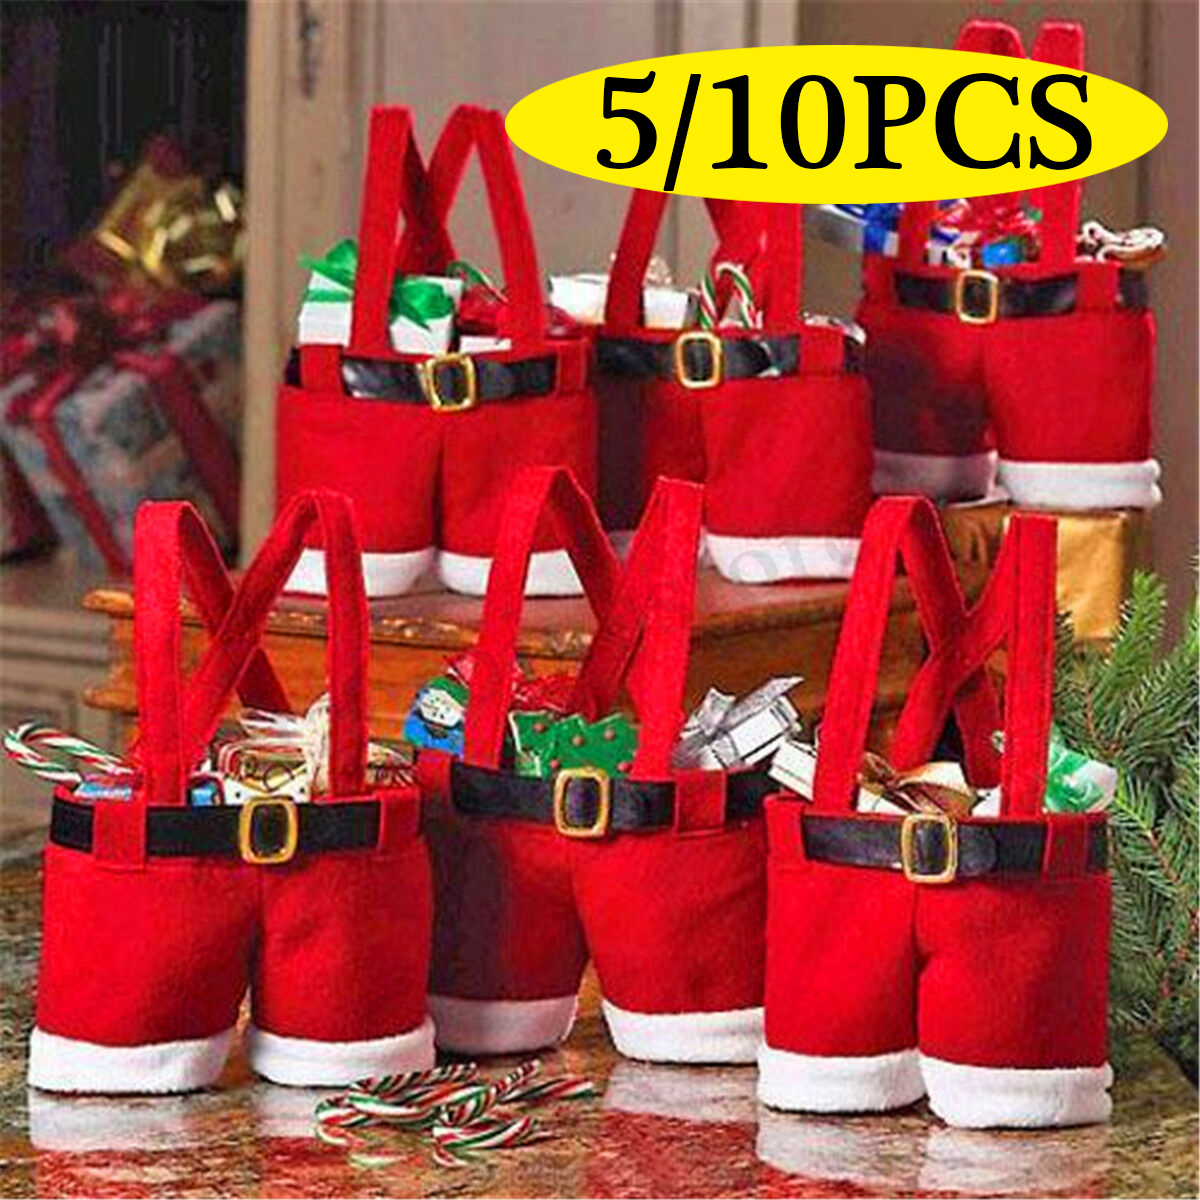 510-Christmas-Santa-Pants-Candy-Gift-Bag-Sweet-Sack-Holder-Stocking-Filler-948849-2